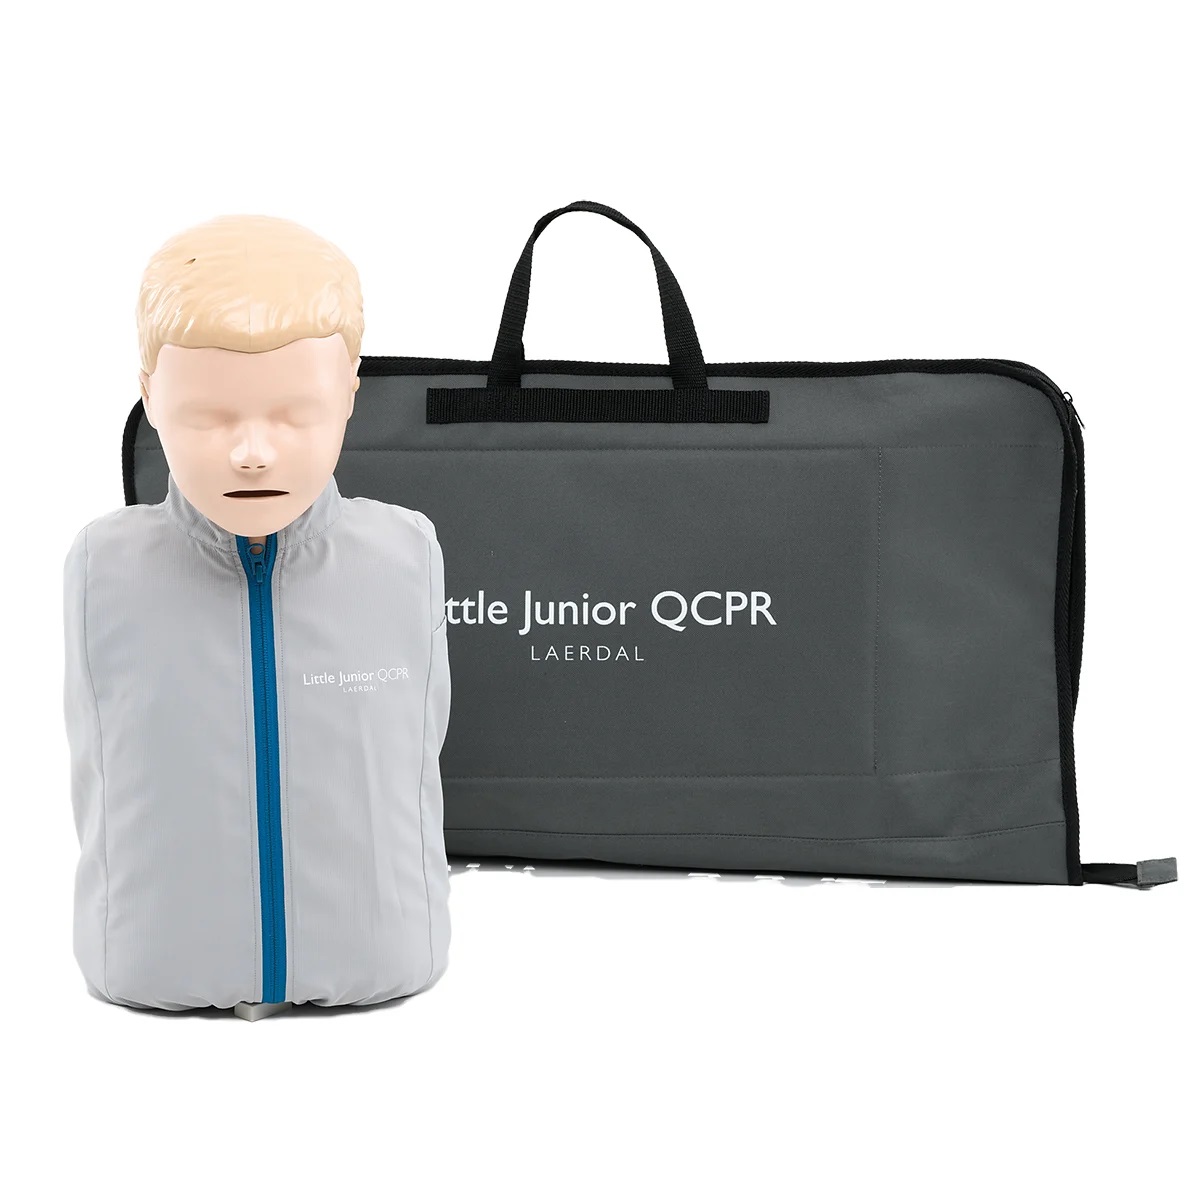 Little Junior QCPR Training Manikin with Carry Bag - Light Skin